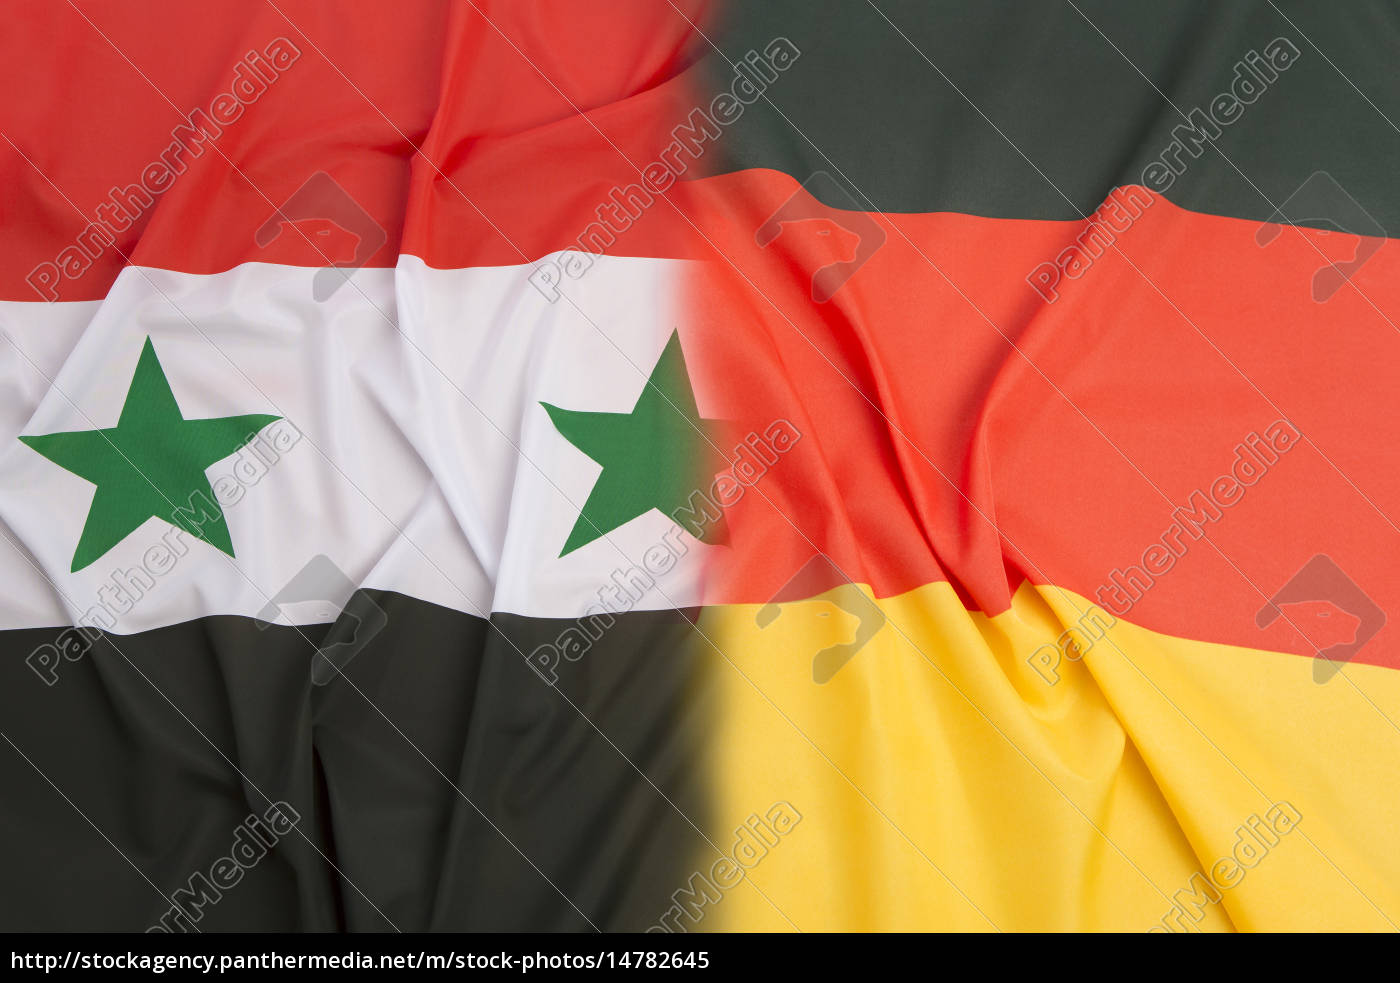 Syria flag vs. Germany flag - Lizenzfreies Bild #14782645